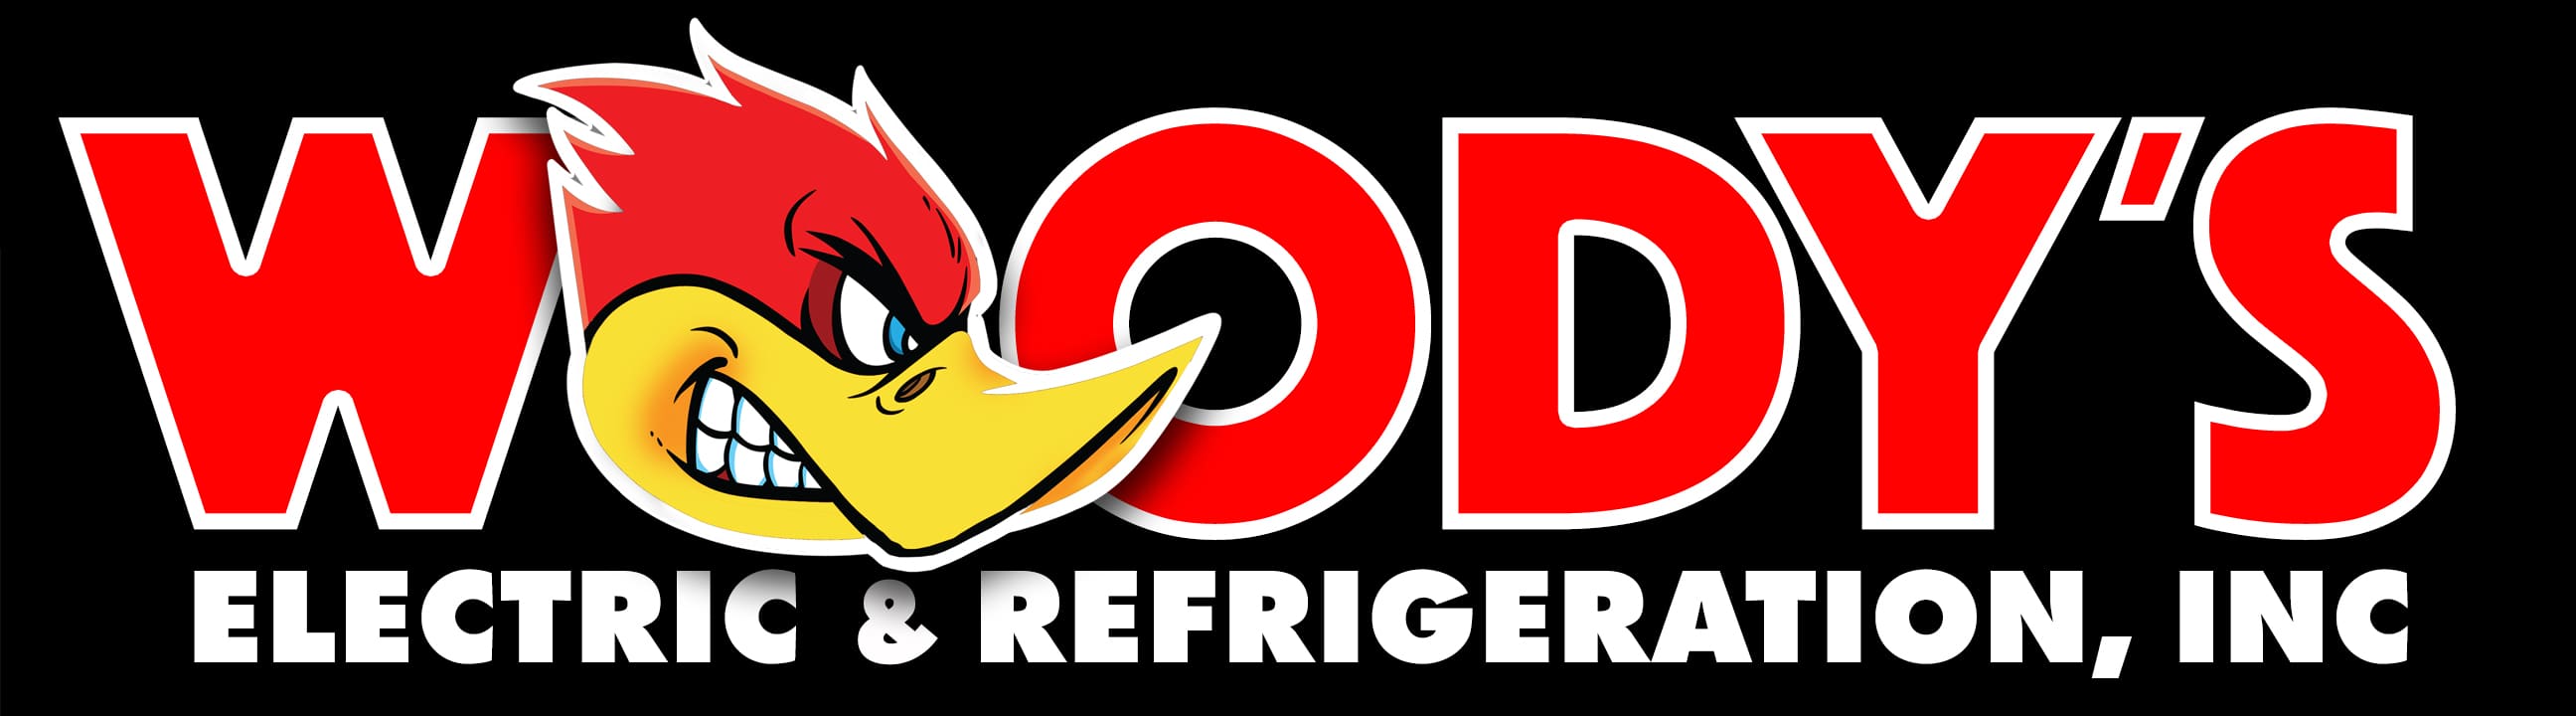 Woody's-Electric-&-Refrigeration-Large-Logo.jpg